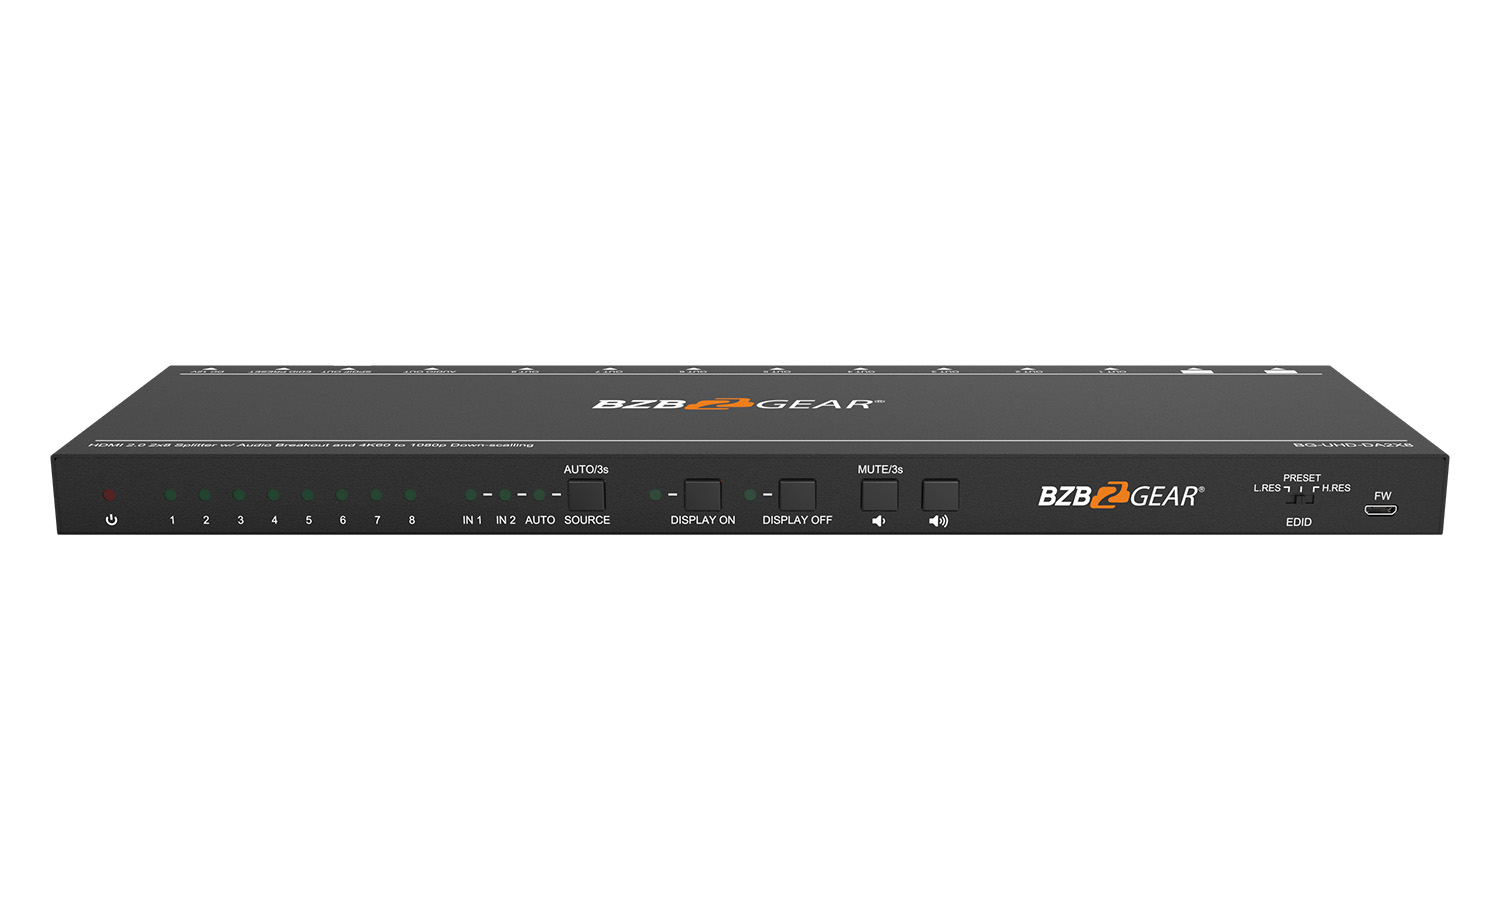 BZBGEAR BG-UHD-DA2X8 2x8 4K UHD HDMI Splitter/Distribution Amplifier with CEC Turn On/Off TV